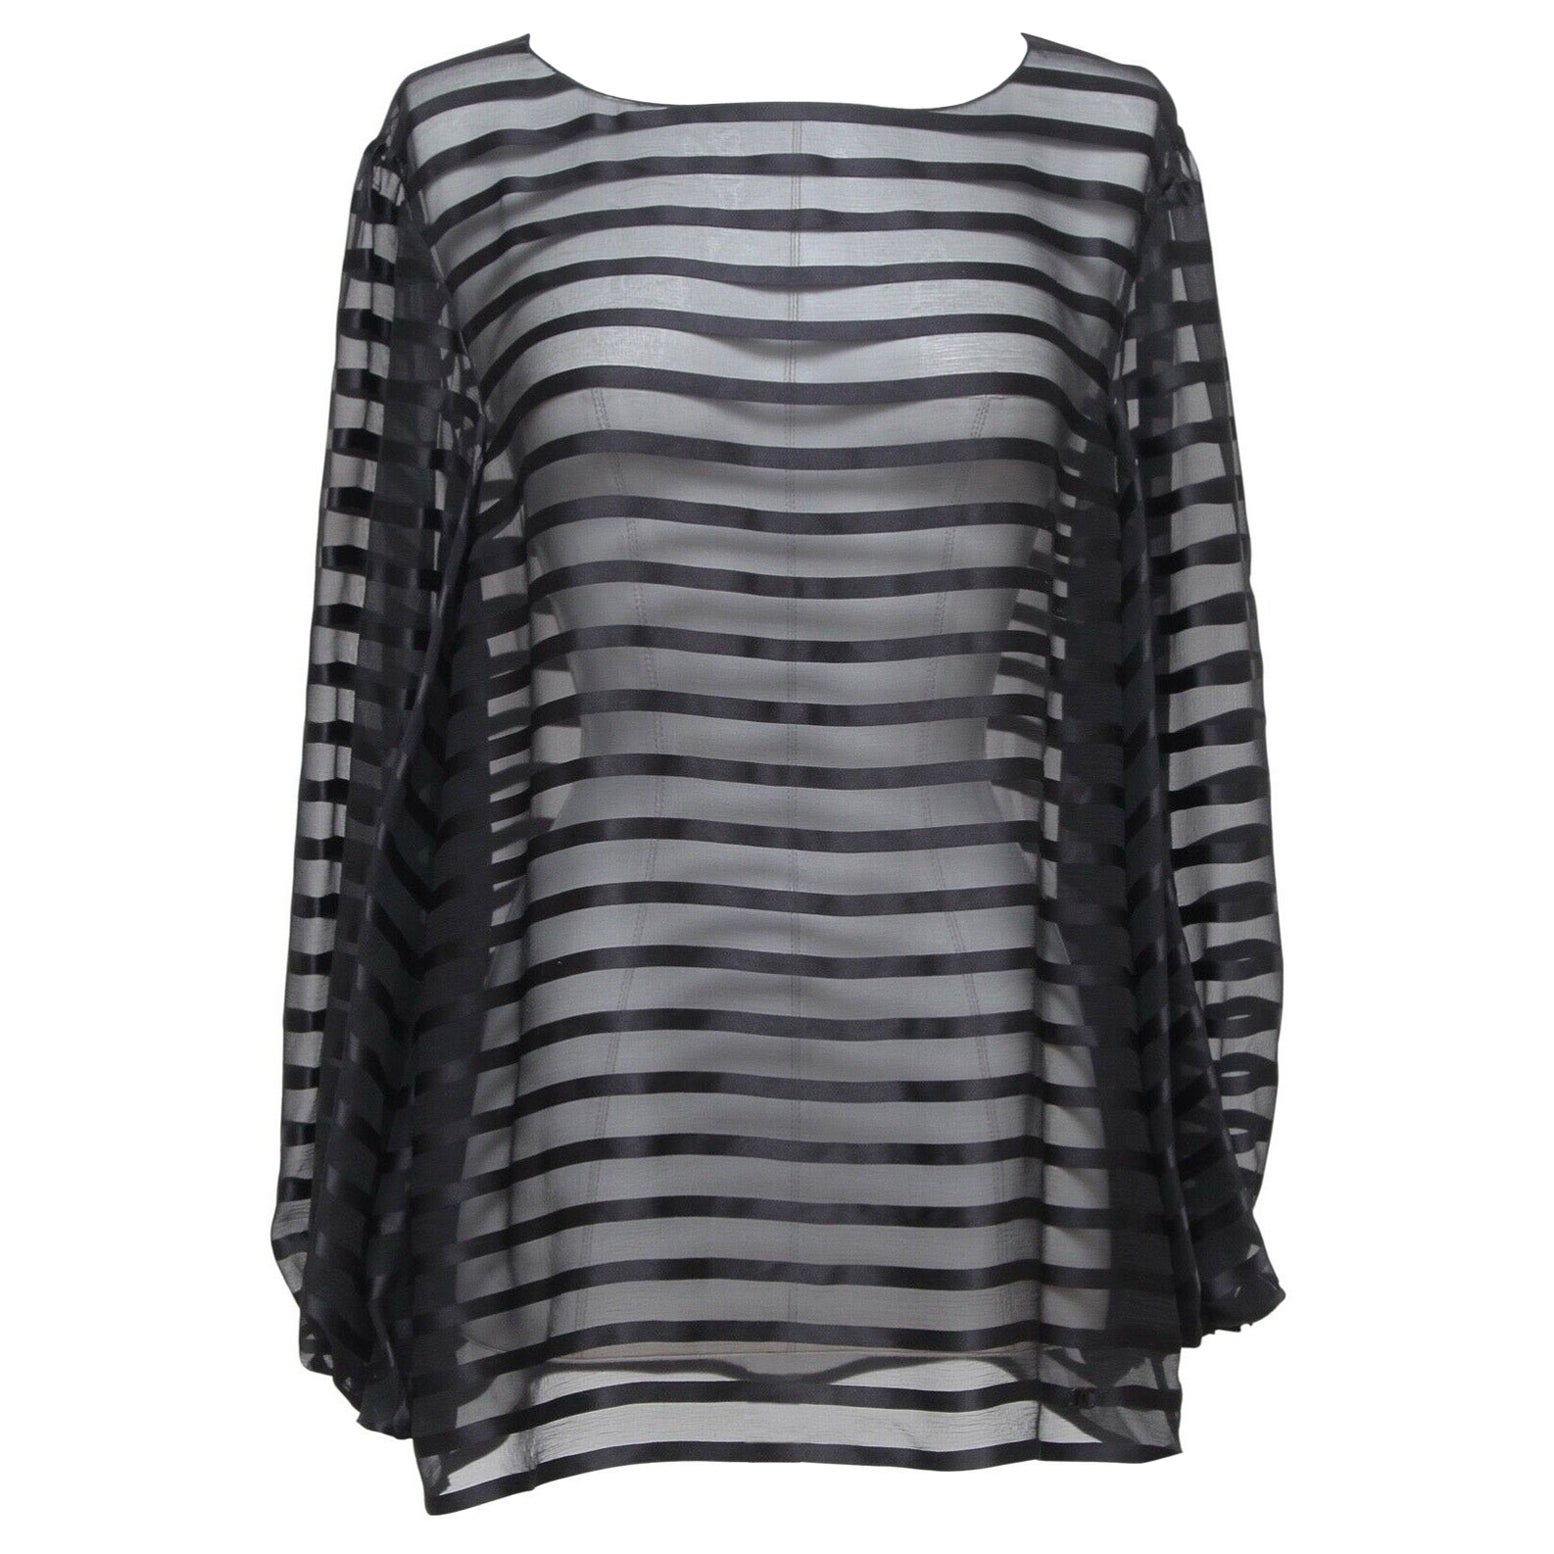 CHANEL Black Silk Blouse Shirt Top Long Sleeve Striped Bateau CC 2013 Sz 38